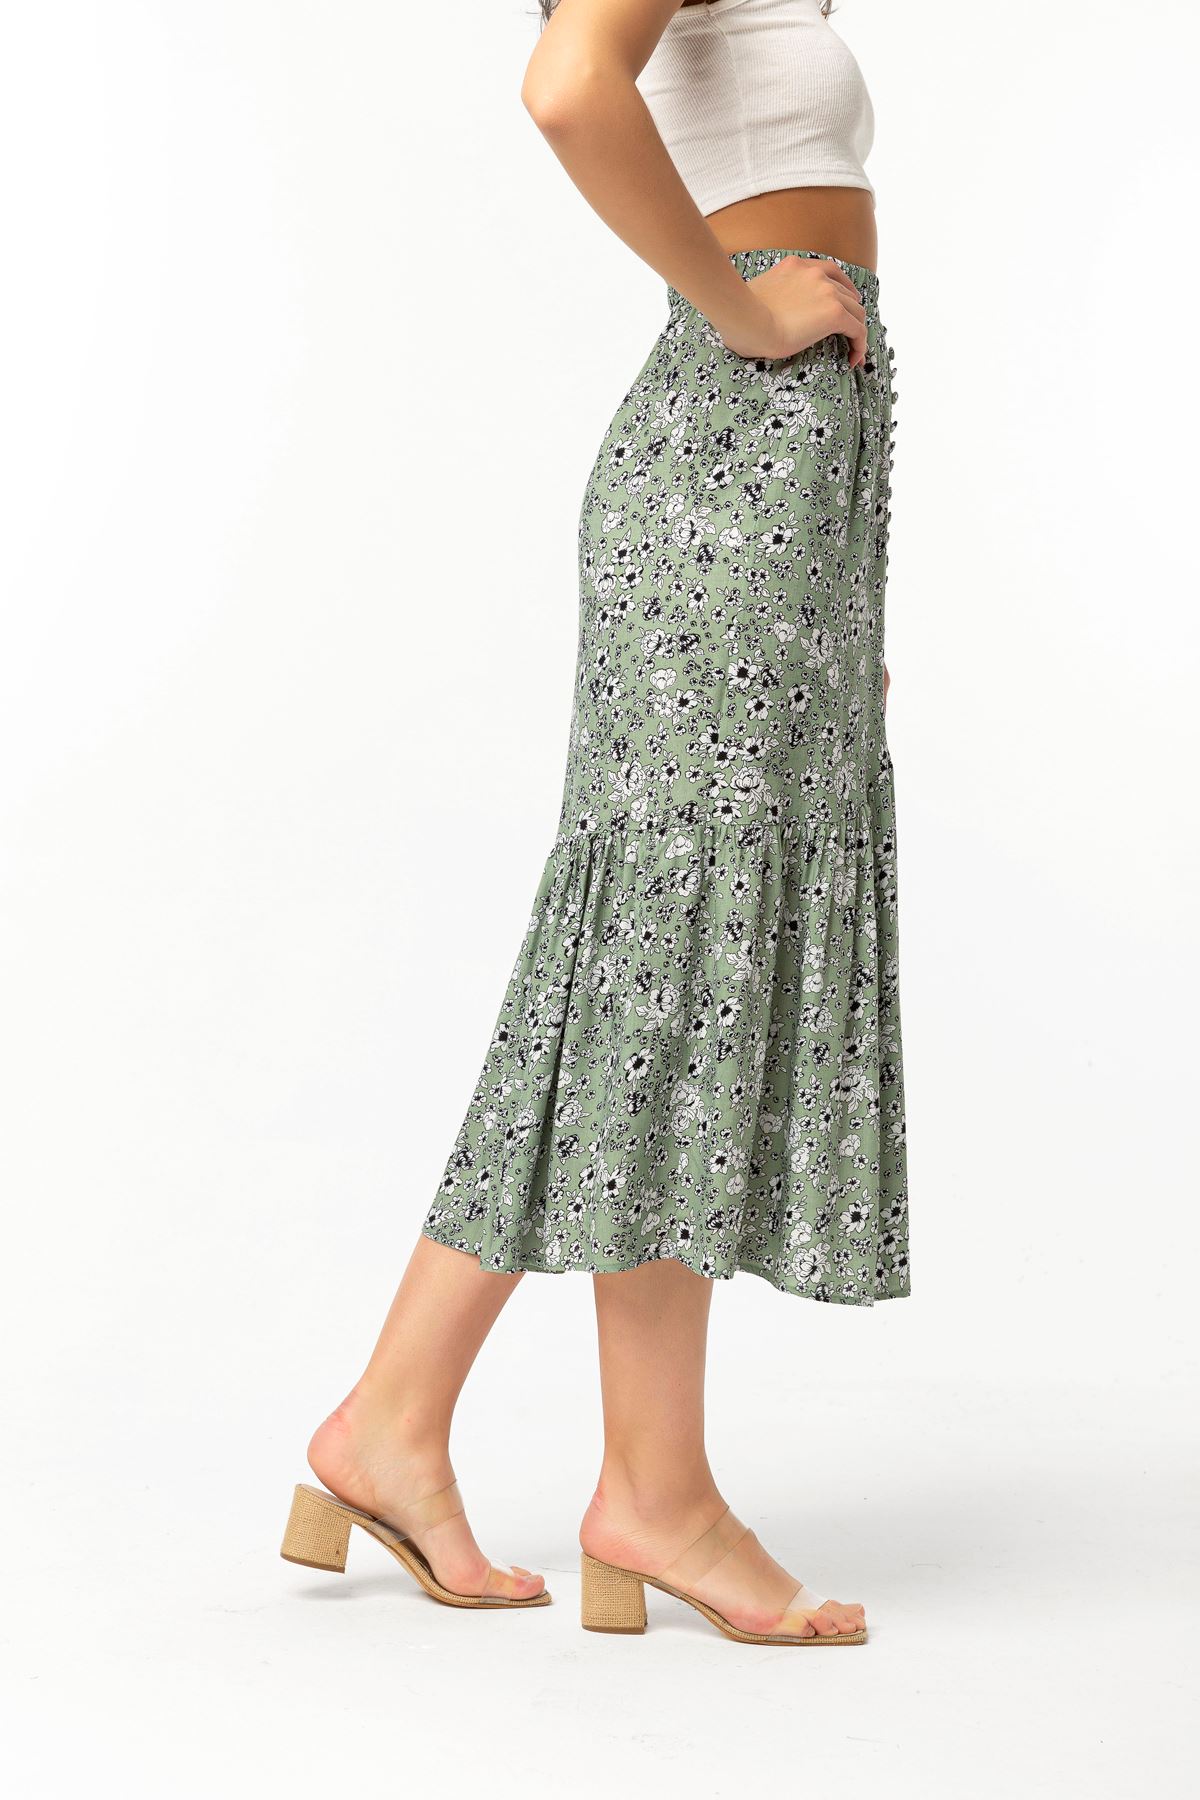 Viscose Fabric Long Comfy Fit Floral Print Women'S Skirt - Mint